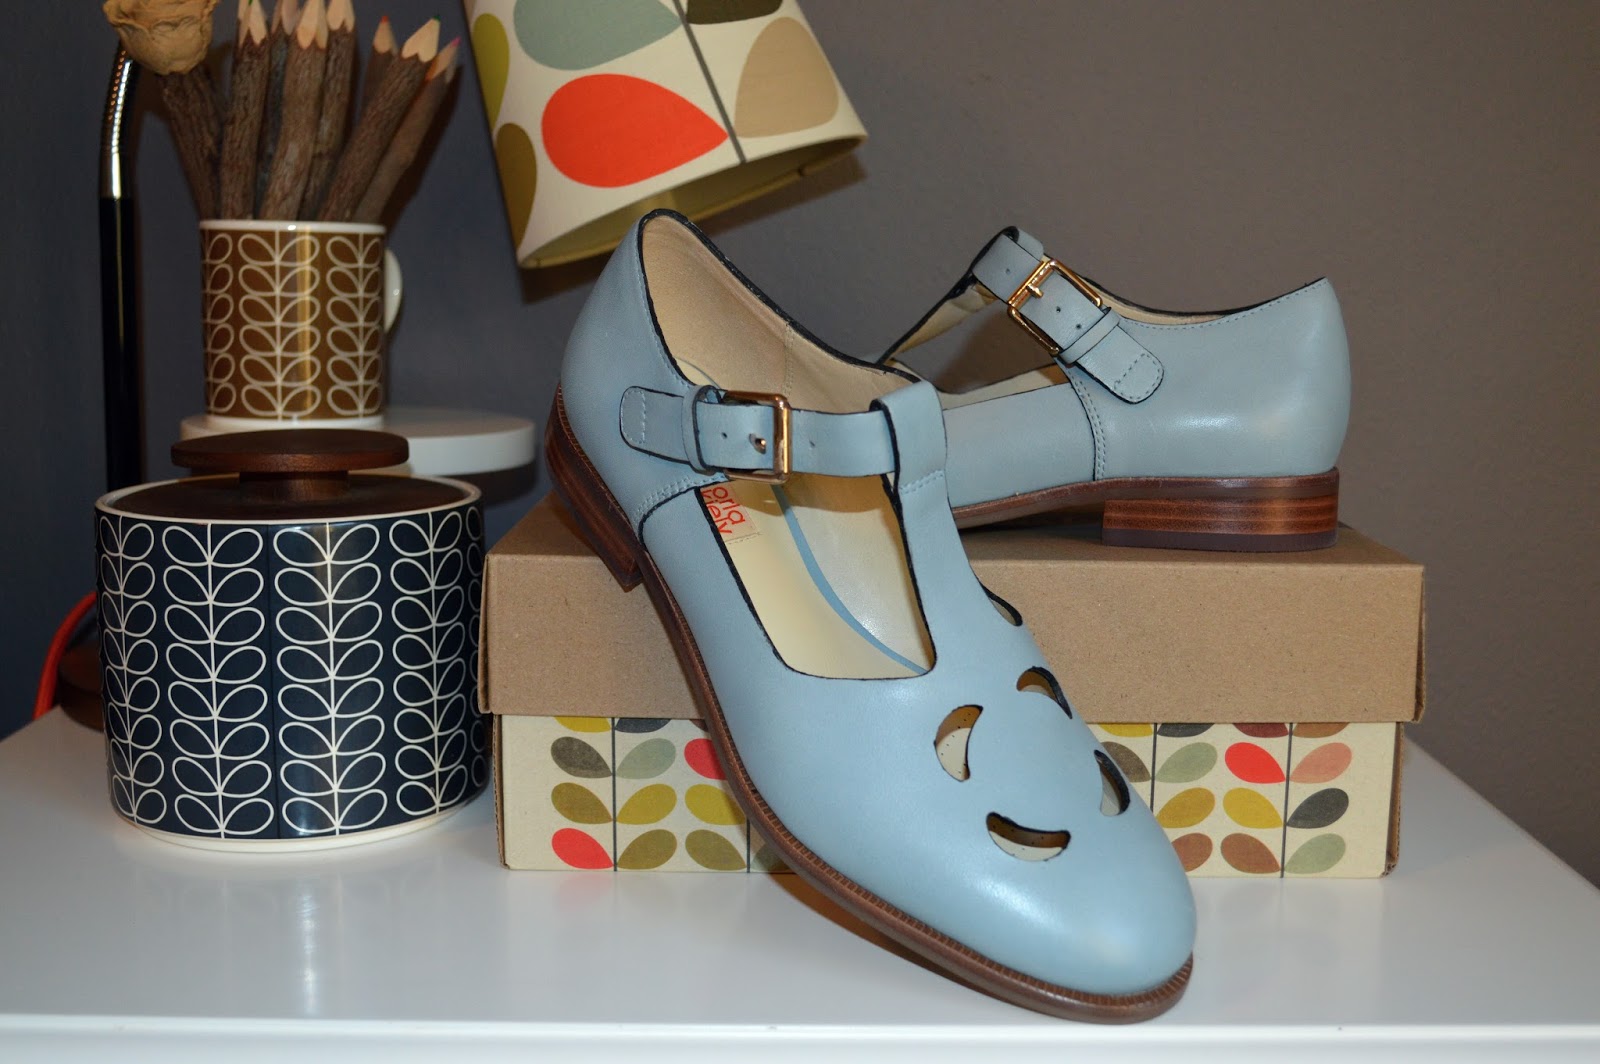 I Love Orla Kiely: Haul + Review: Orla Kiely for Clarks Bobbie Shoes